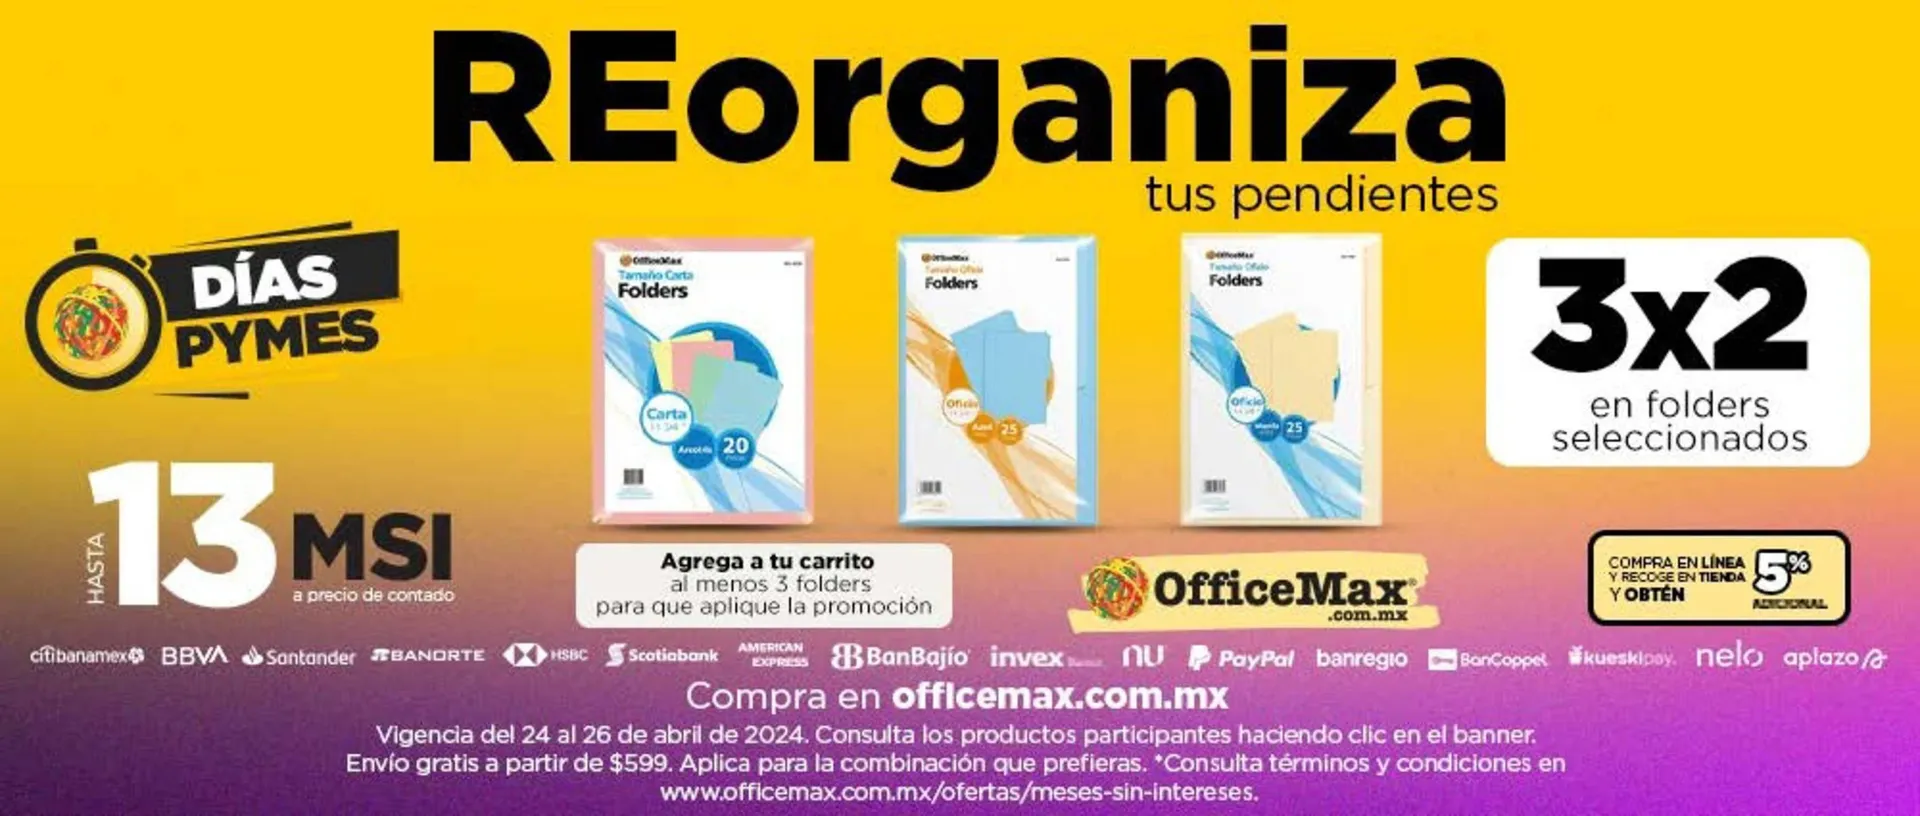 Catálogo OfficeMax - 2